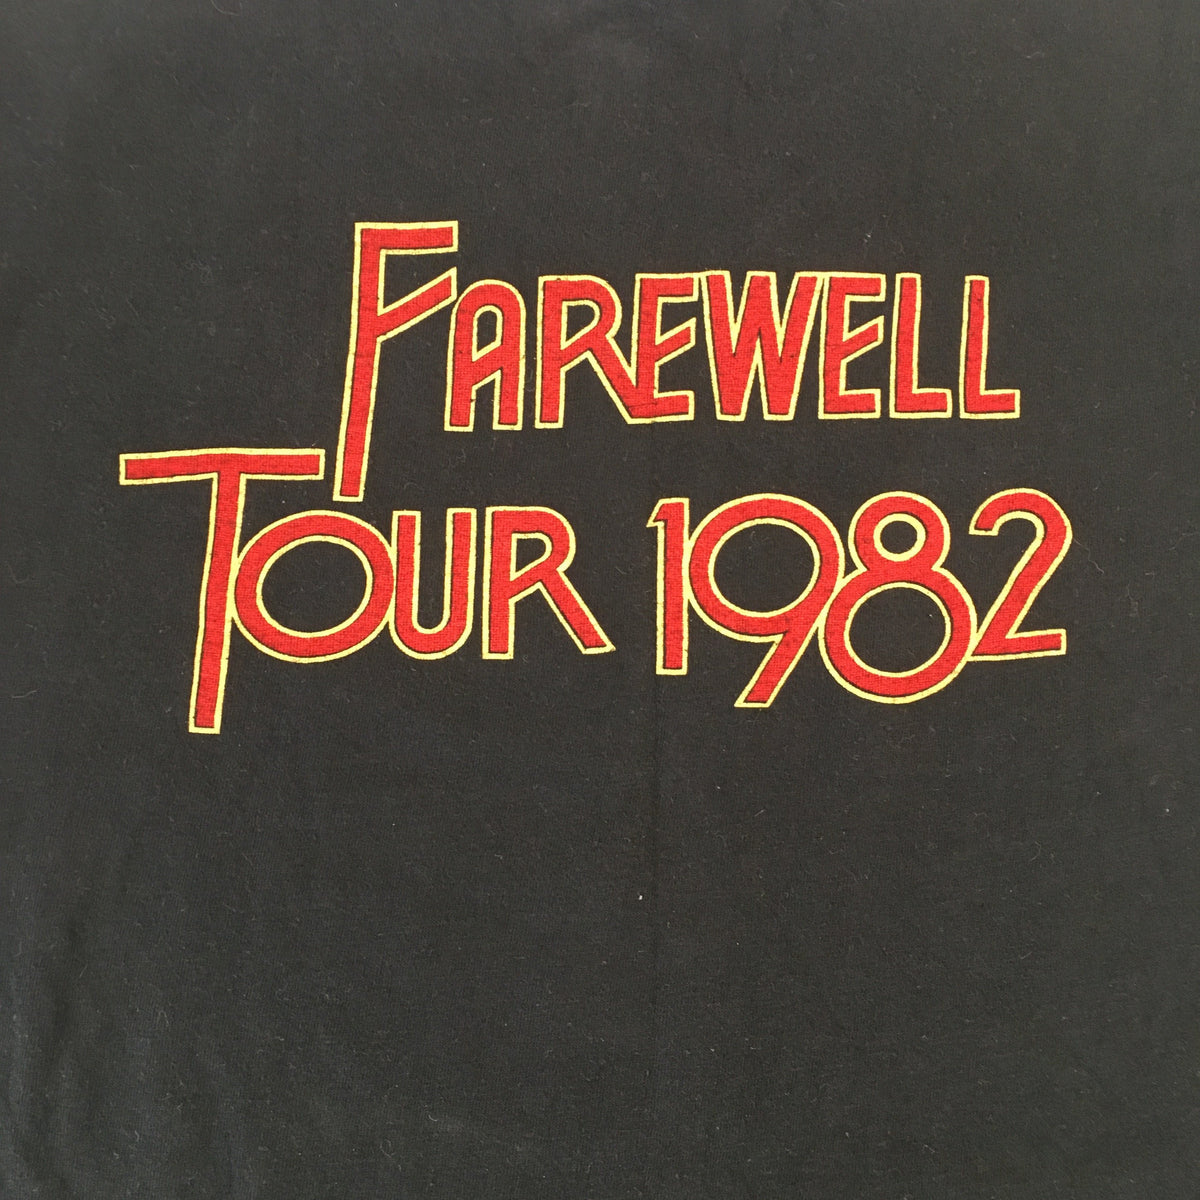 Vintage Doobie Brothers &quot;Farewell Tour&quot; T-Shirt - jointcustodydc